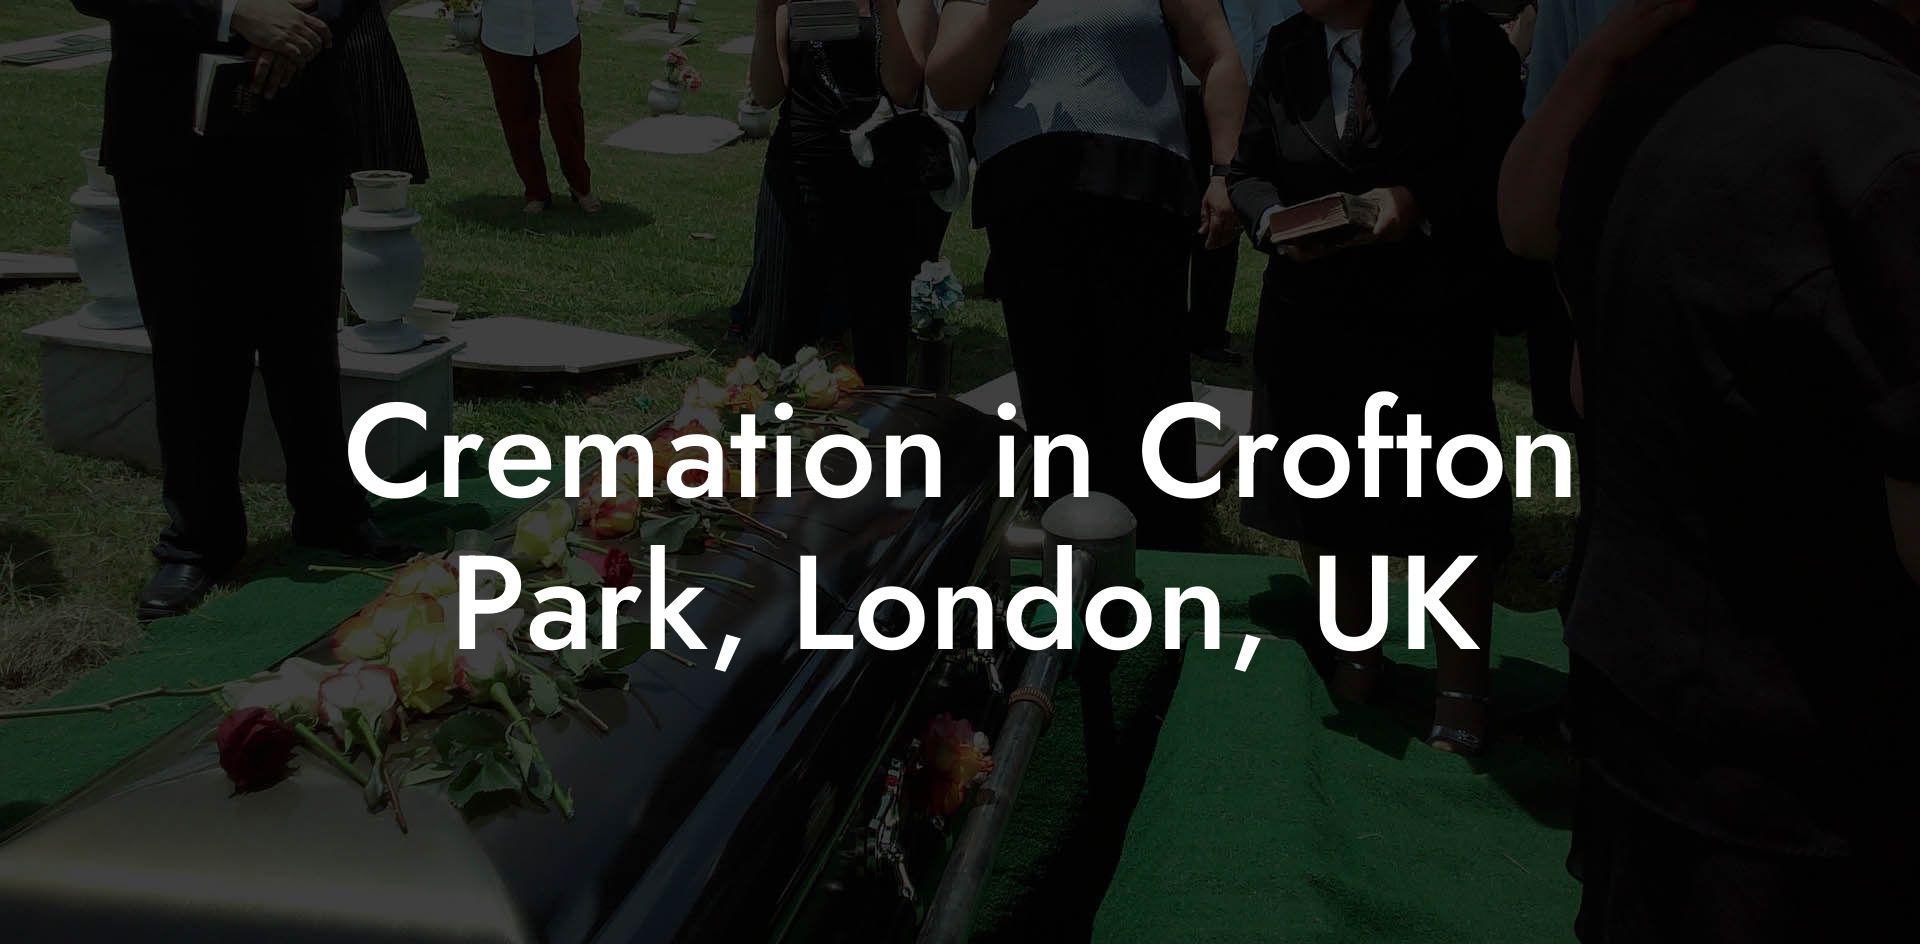 Cremation in Crofton Park, London, UK